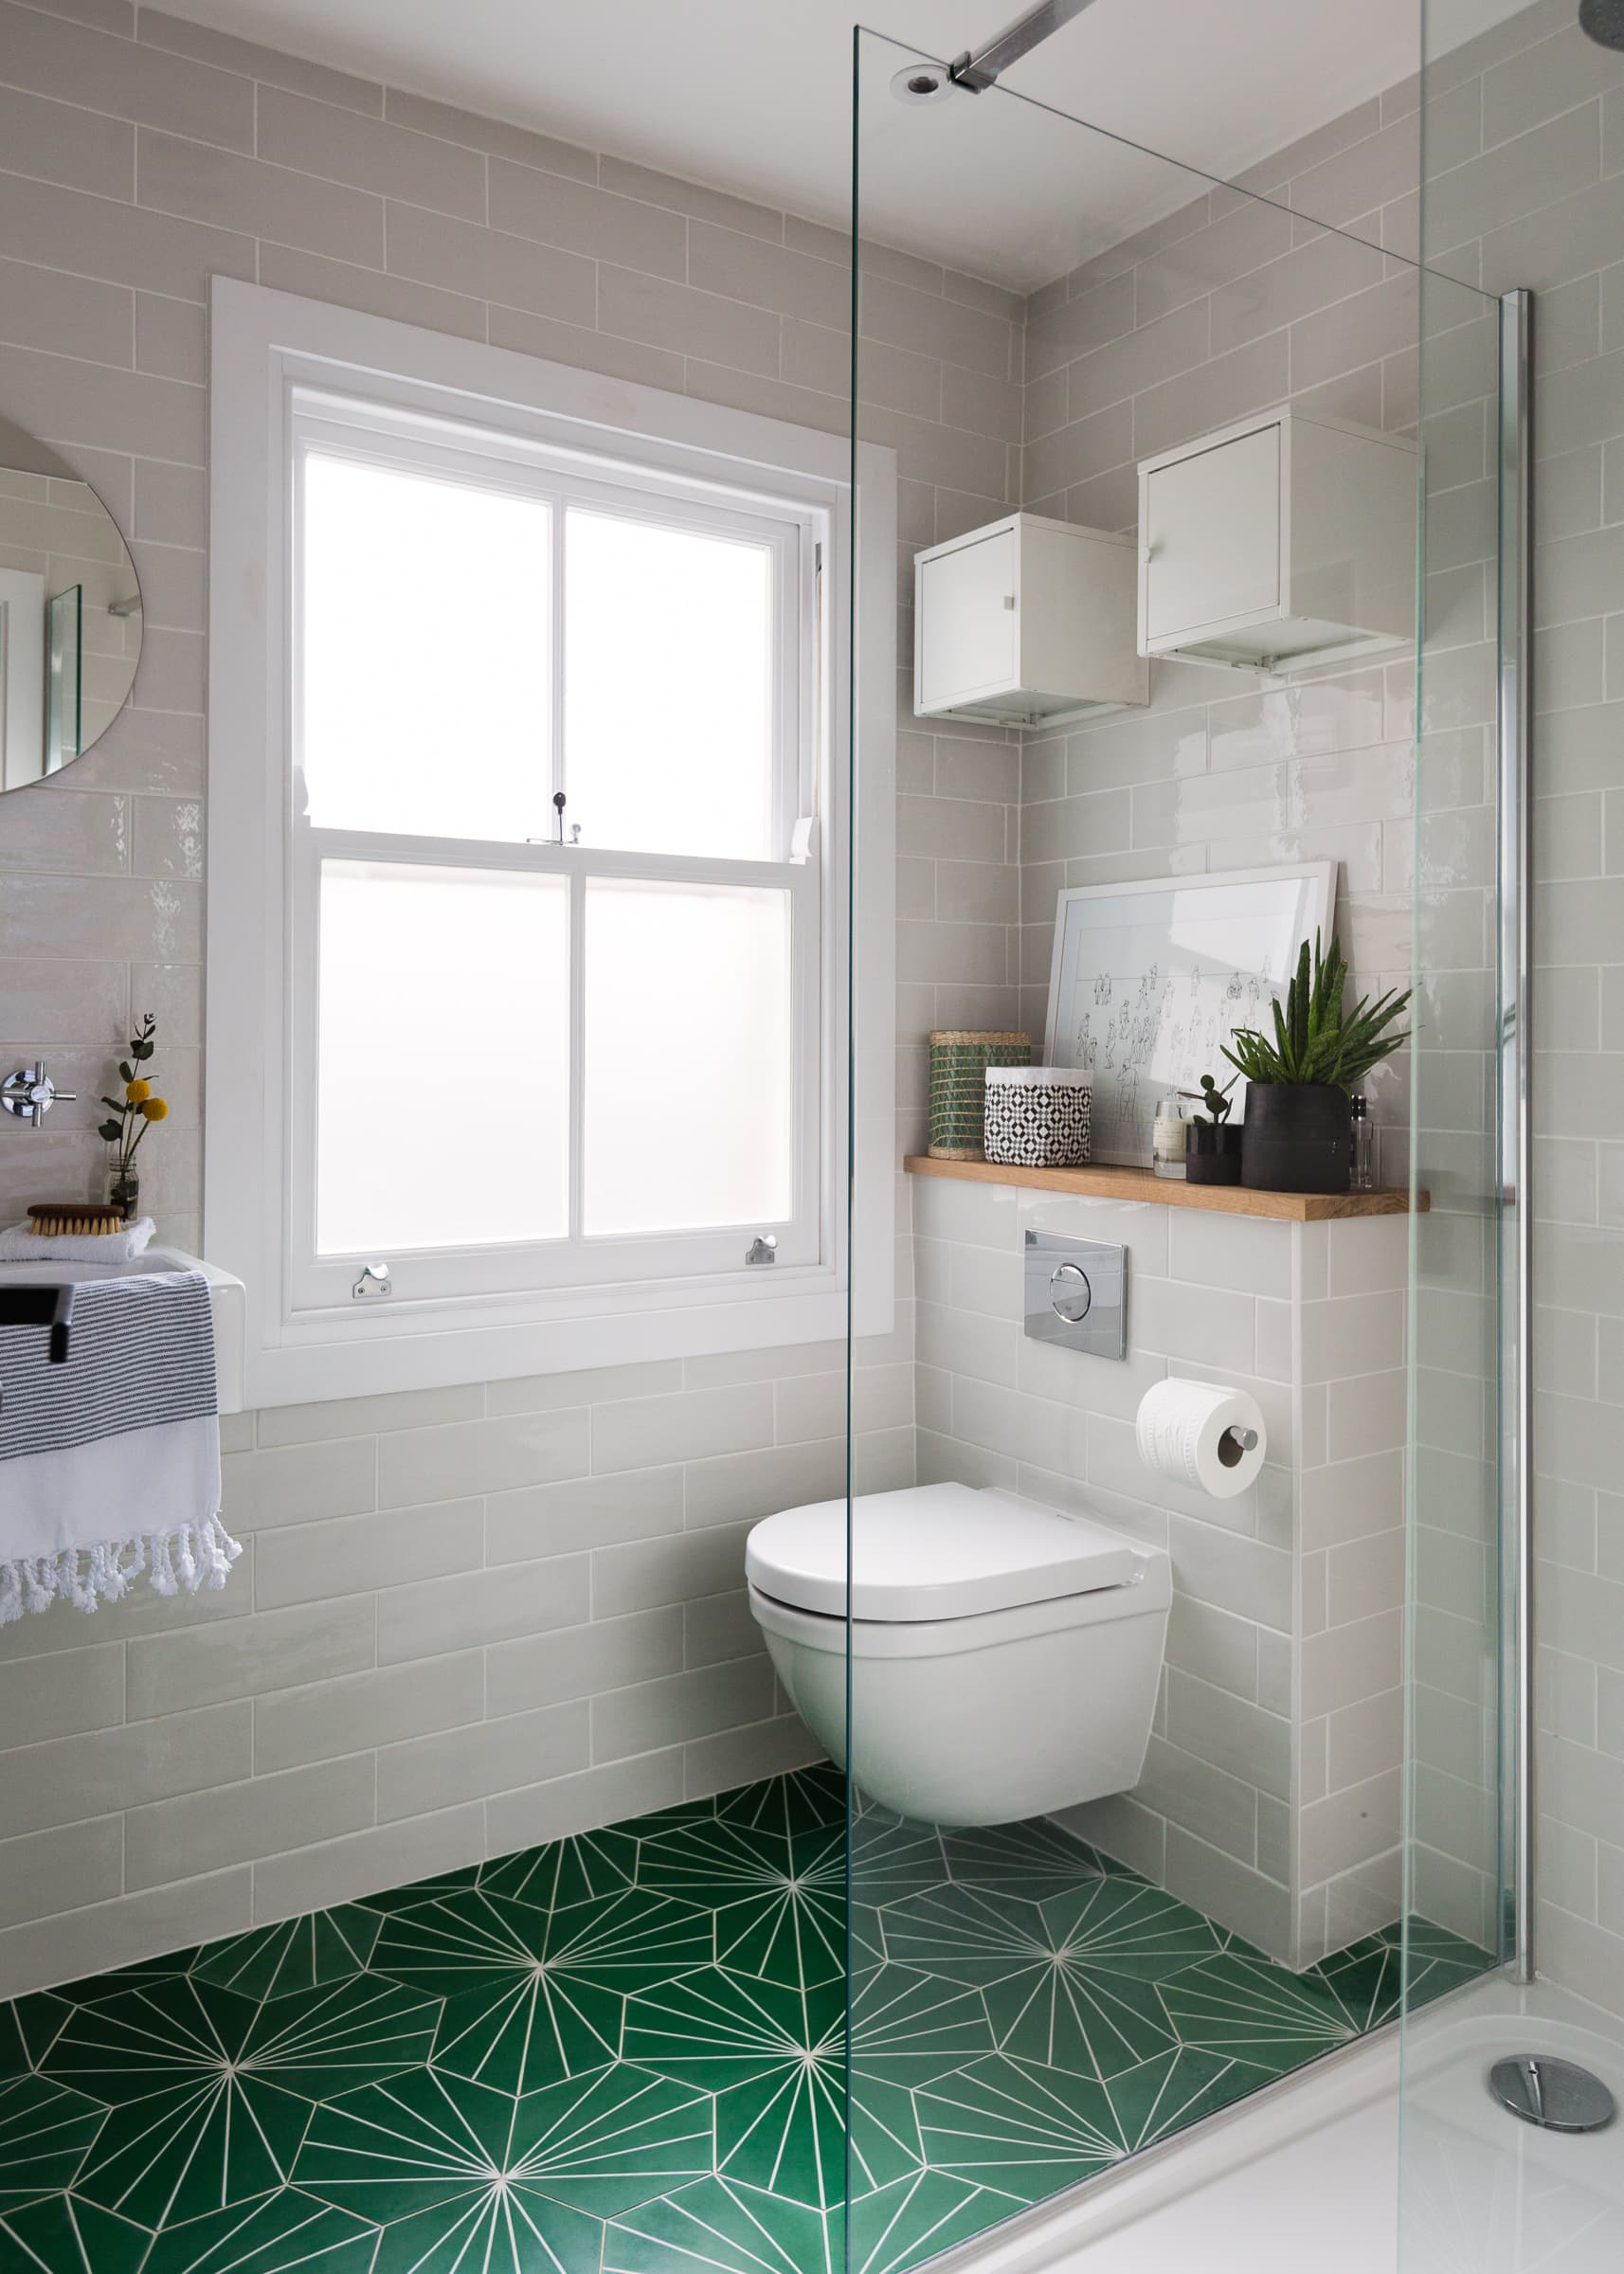 Bathroom Tile Ideas - Floor, Shower, Wall Designs ...